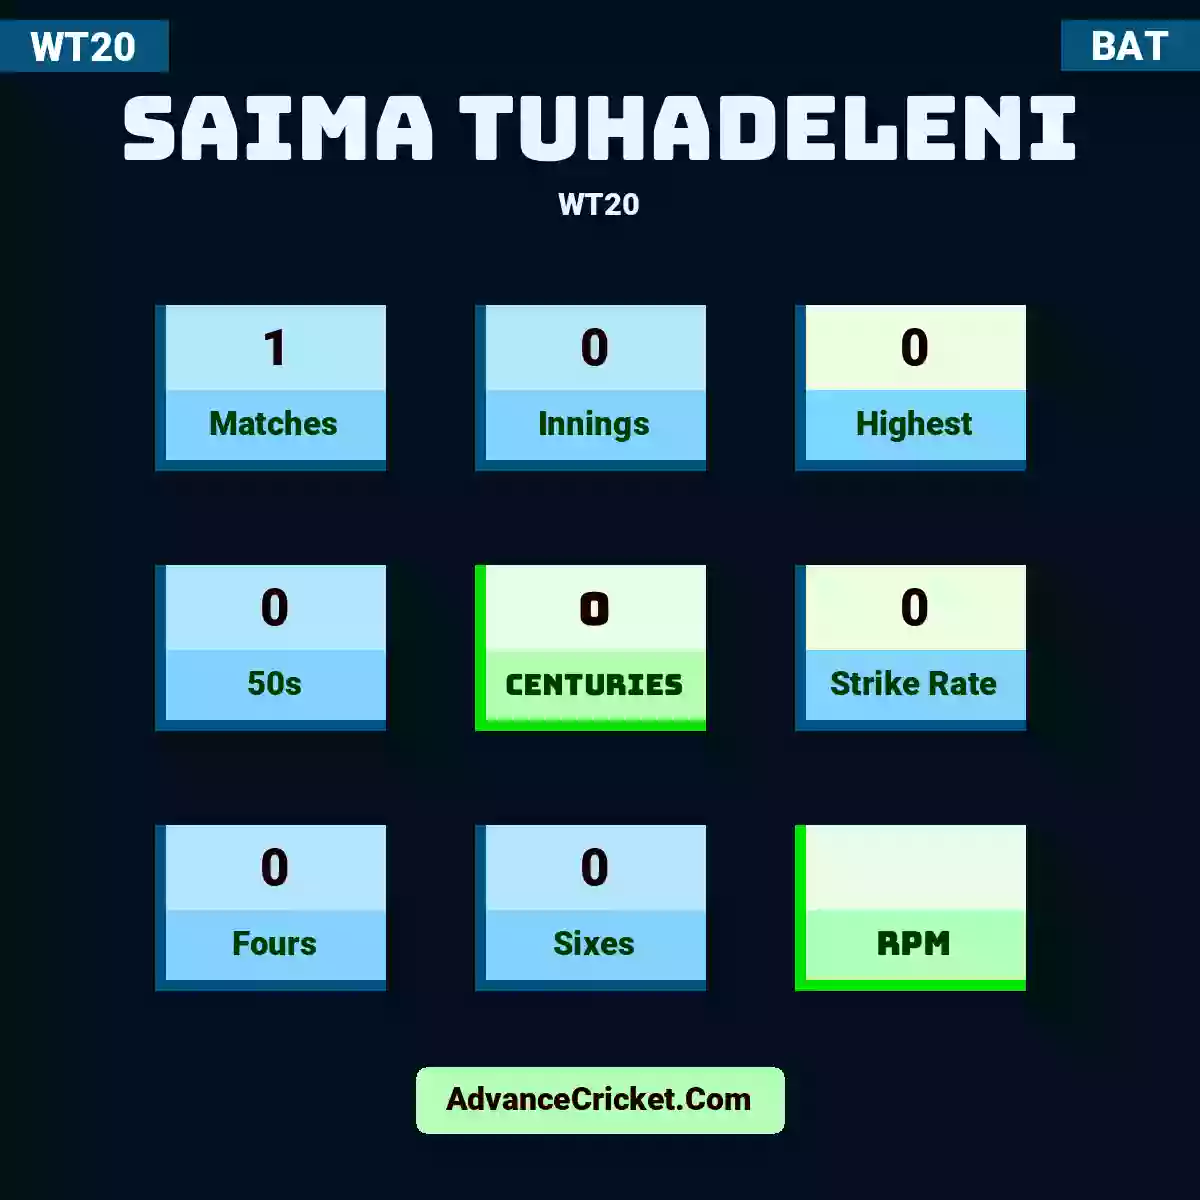 Saima Tuhadeleni WT20 , Saima Tuhadeleni played 1 matches, scored 0 runs as highest, 0 half-centuries, and 0 centuries, with a strike rate of 0. S.Tuhadeleni hit 0 fours and 0 sixes.